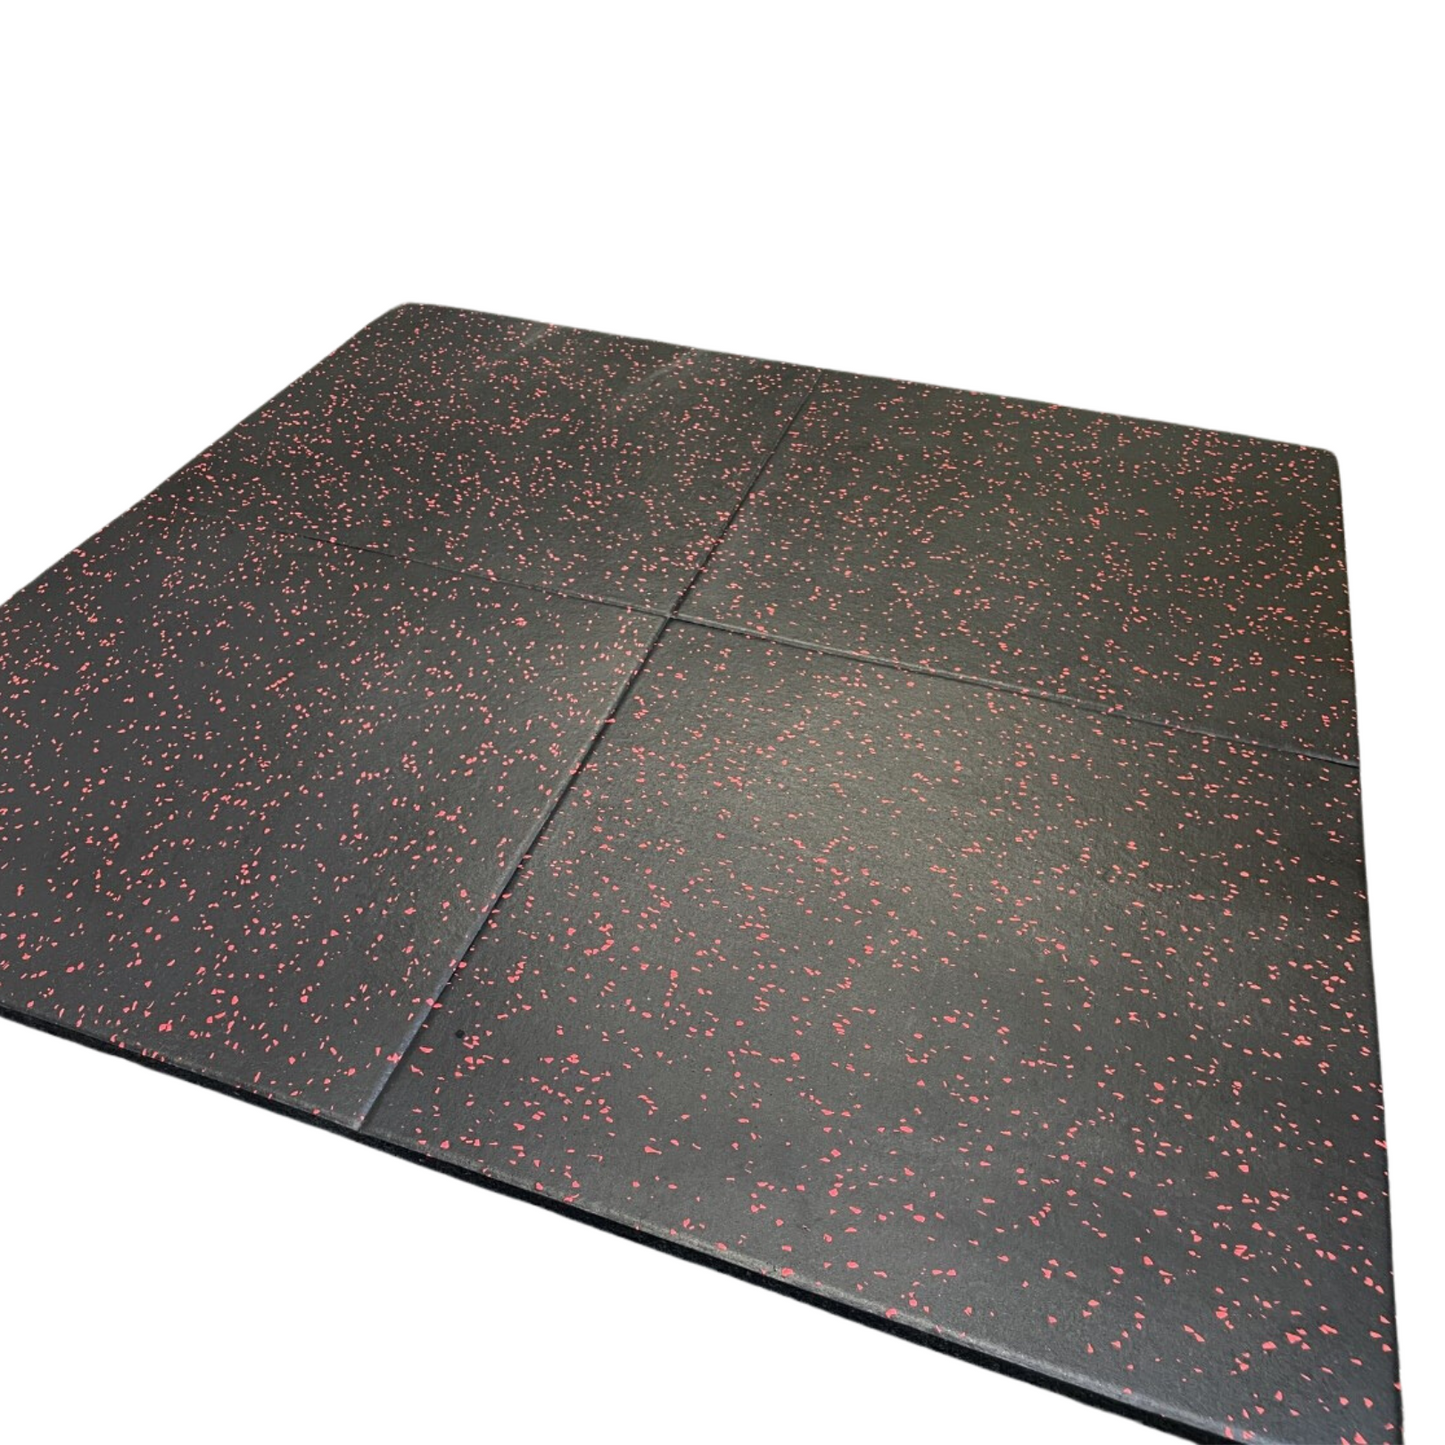 Exersci® Premium Red Speckled Rubber Tiles with Connectors 100cm x 100cm